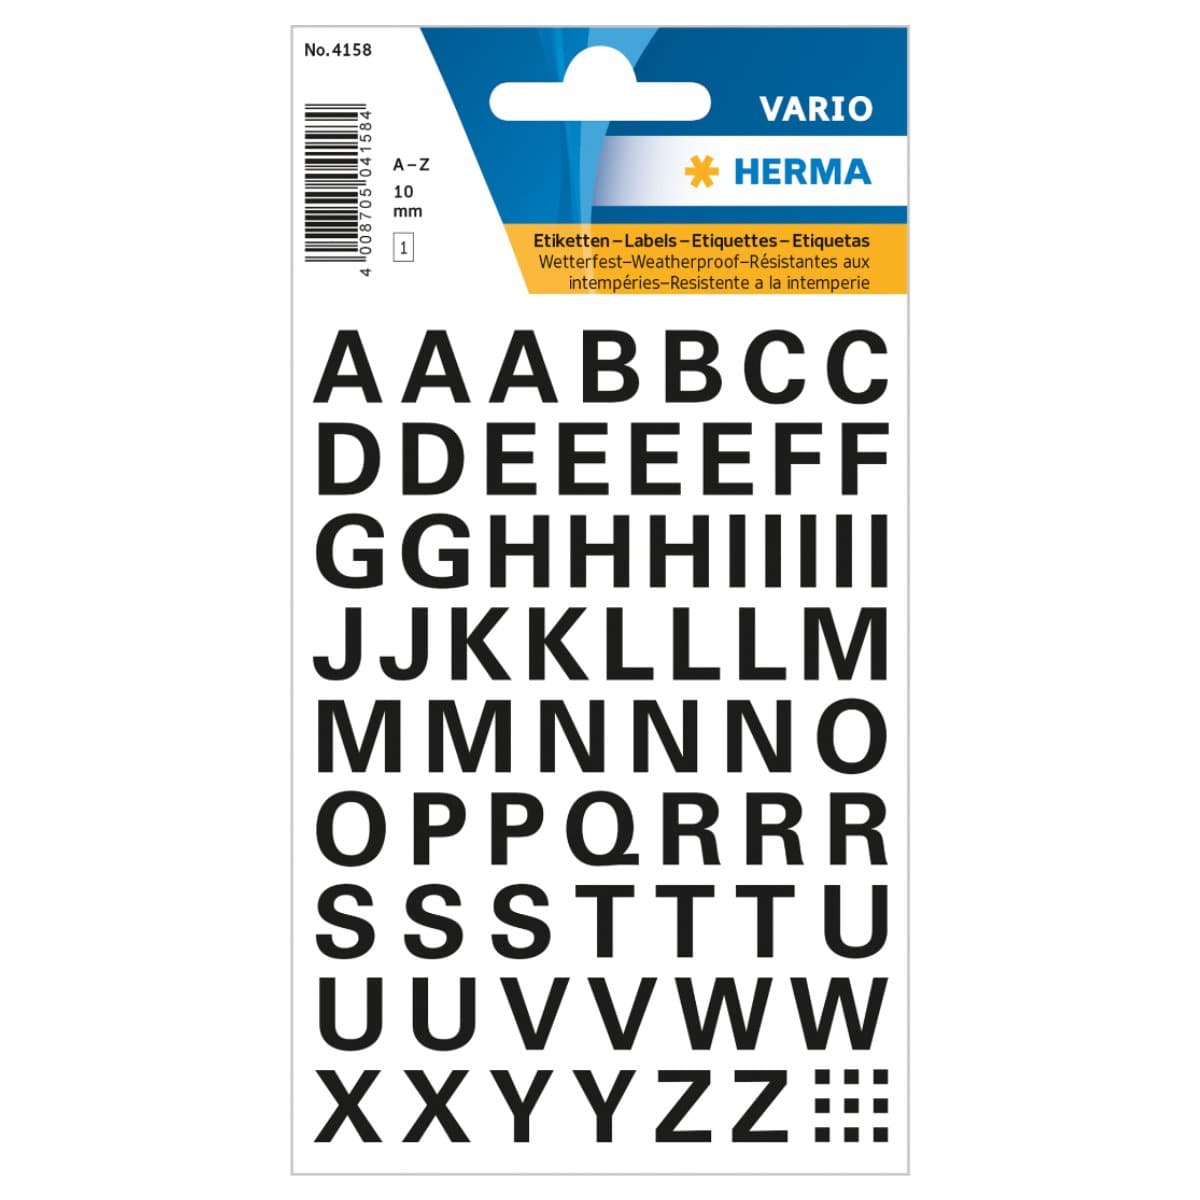 Herma Vario Sticker Letters A-Z, 10mm, weatherproof film, 1sheet/pack, Black